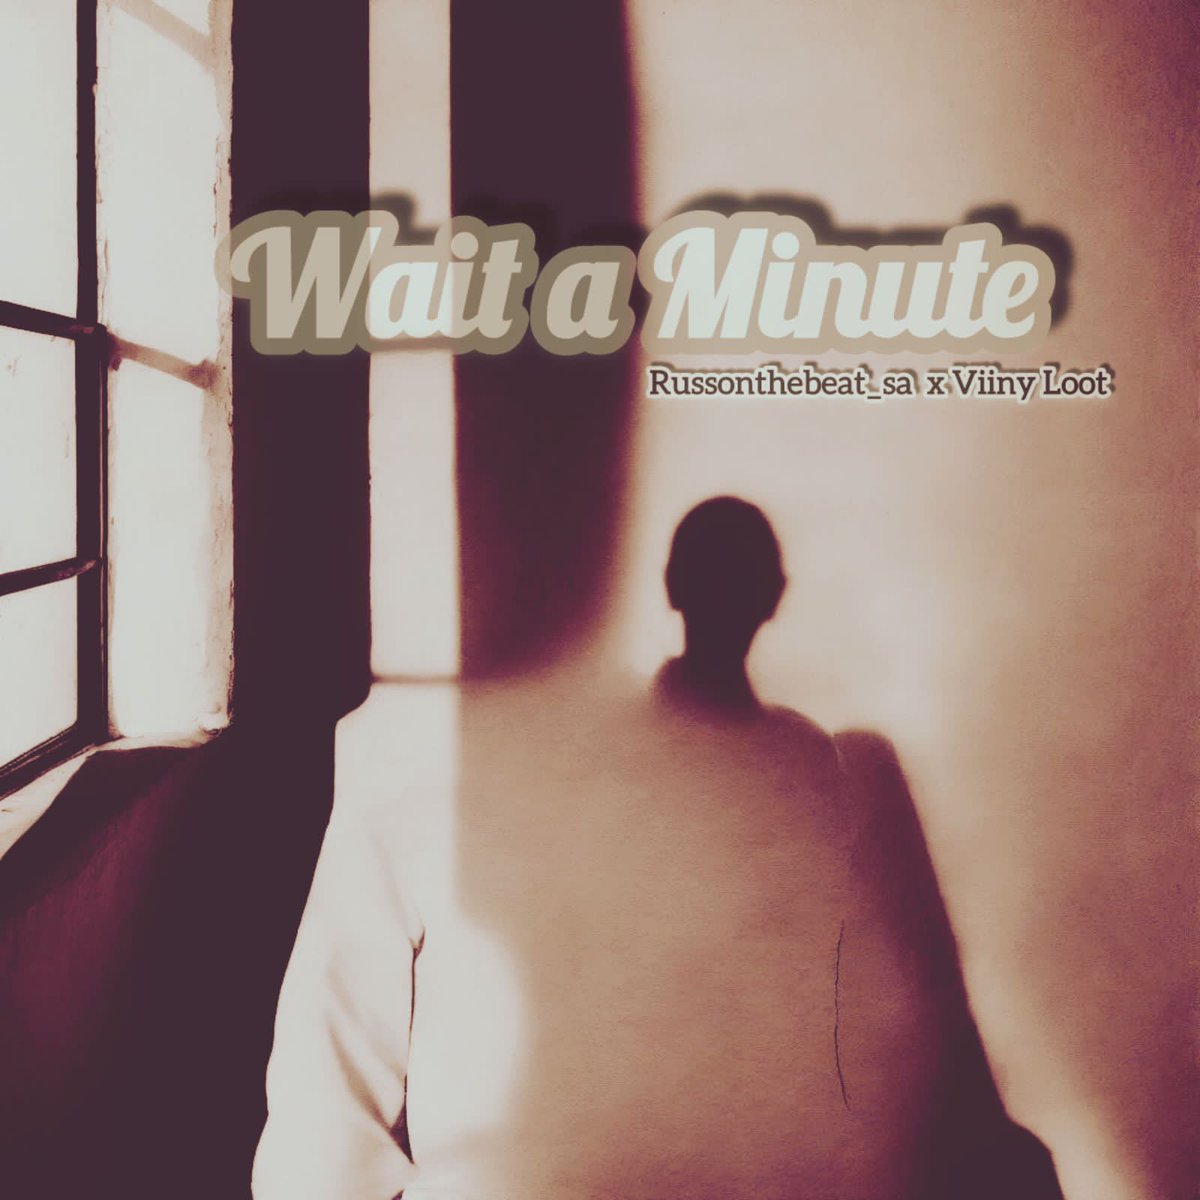 WAIT A MINUTE!

ampl.ink/waitaminute

#WeAreACreativeHub #WaitAMinute